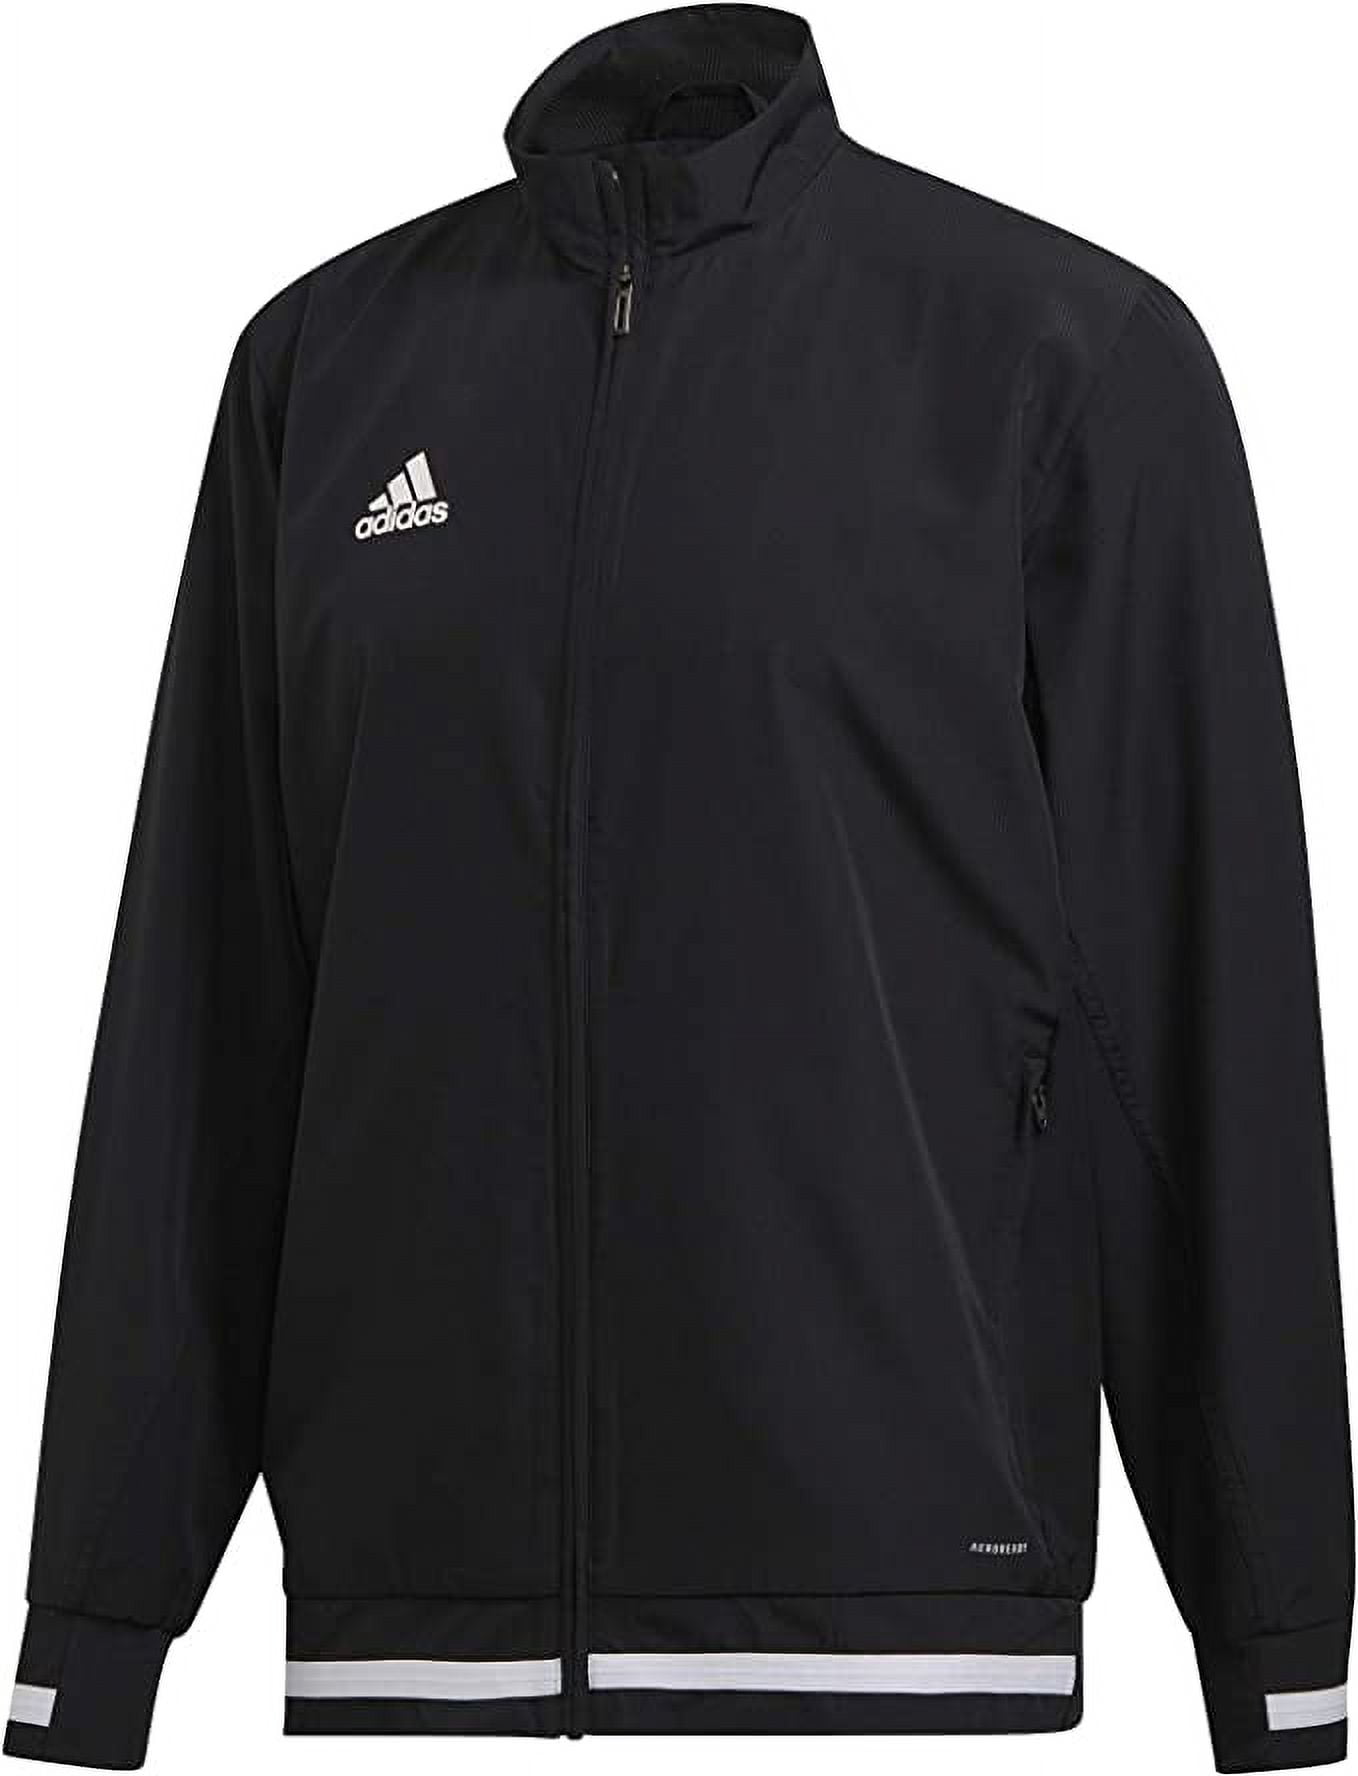 Adidas Team 19 Woven Jacket-Men's Multi-Sport DW6876 Black White M ...